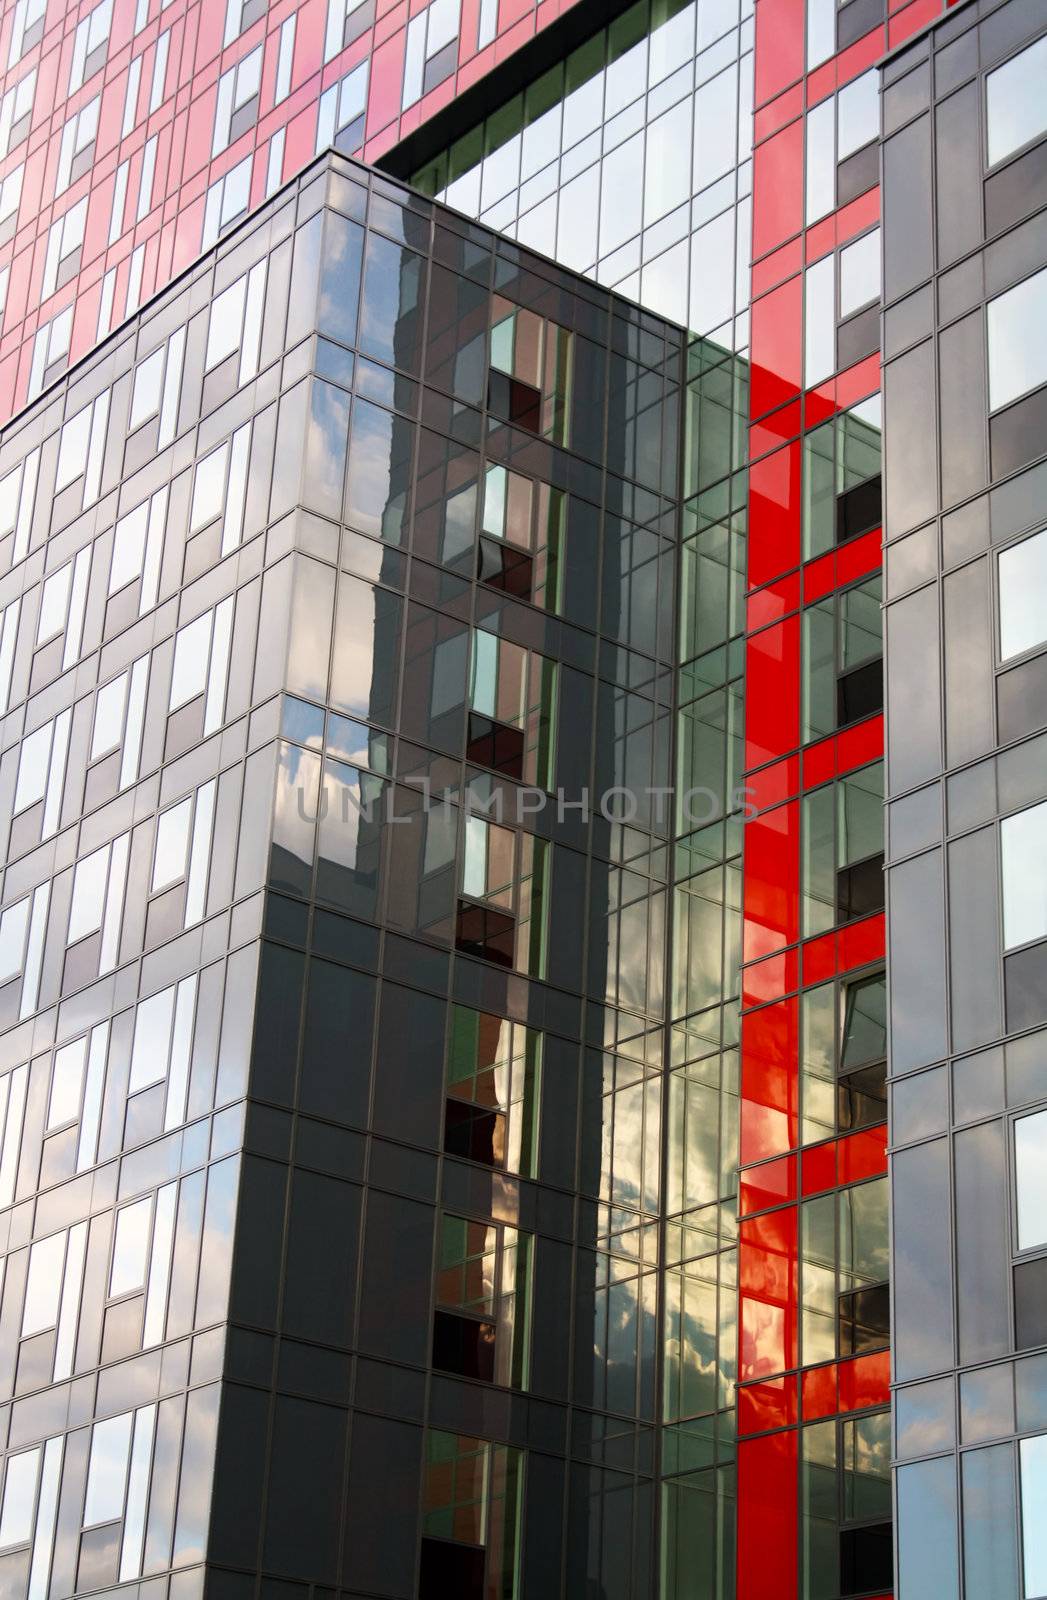 Glass facade of a modern building